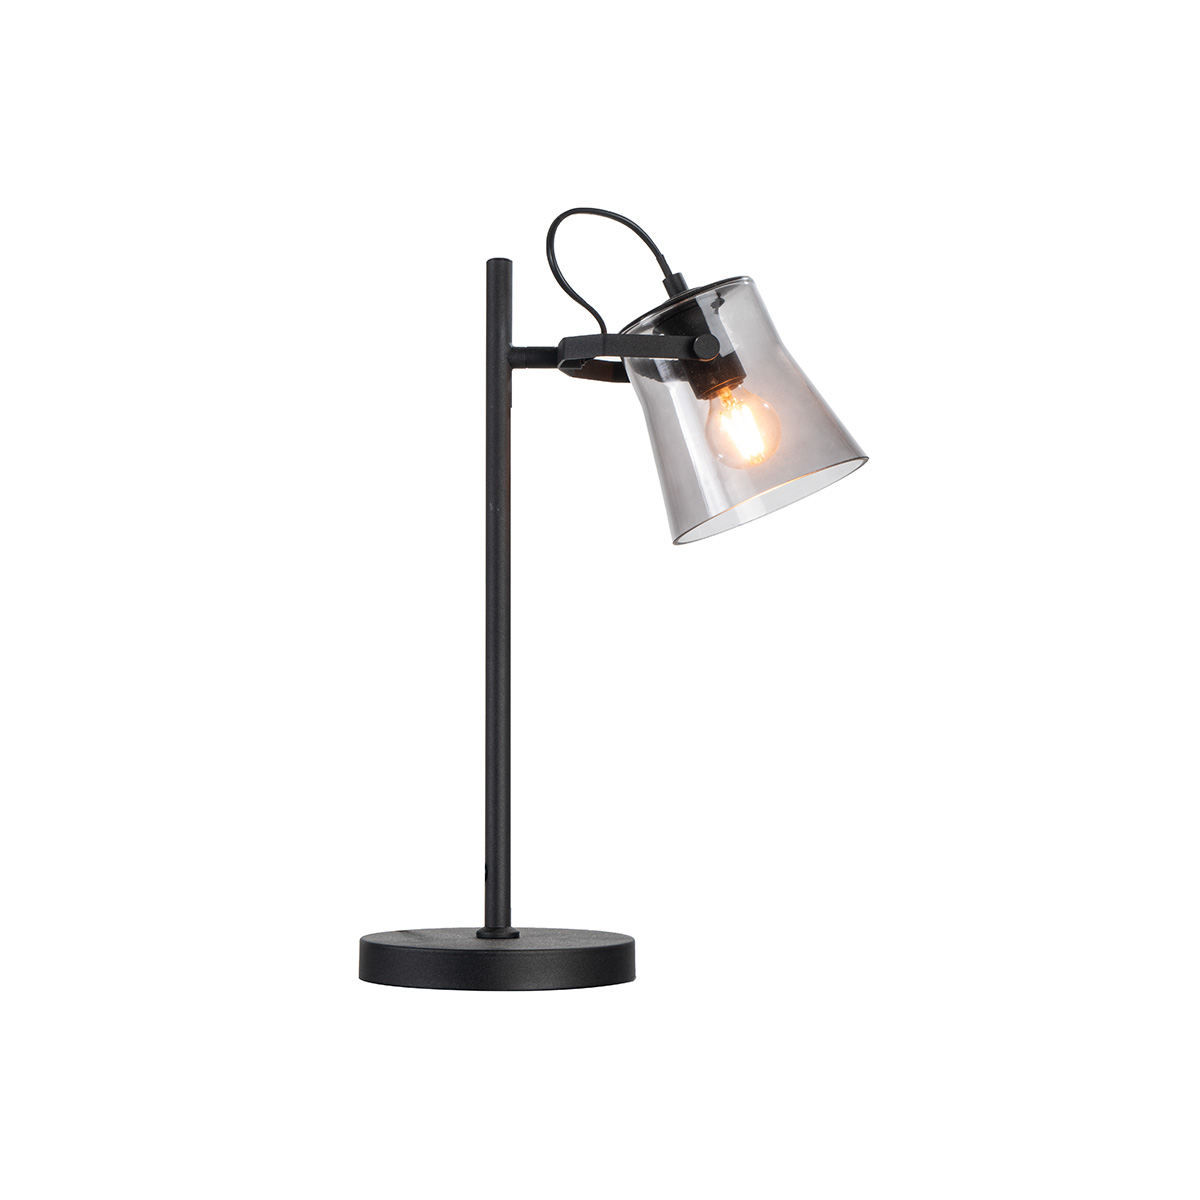 Tangla lighting - TLT7406-01SM - Table lamp 1 Light - metal + glass - sand black + smoke - drum - E14